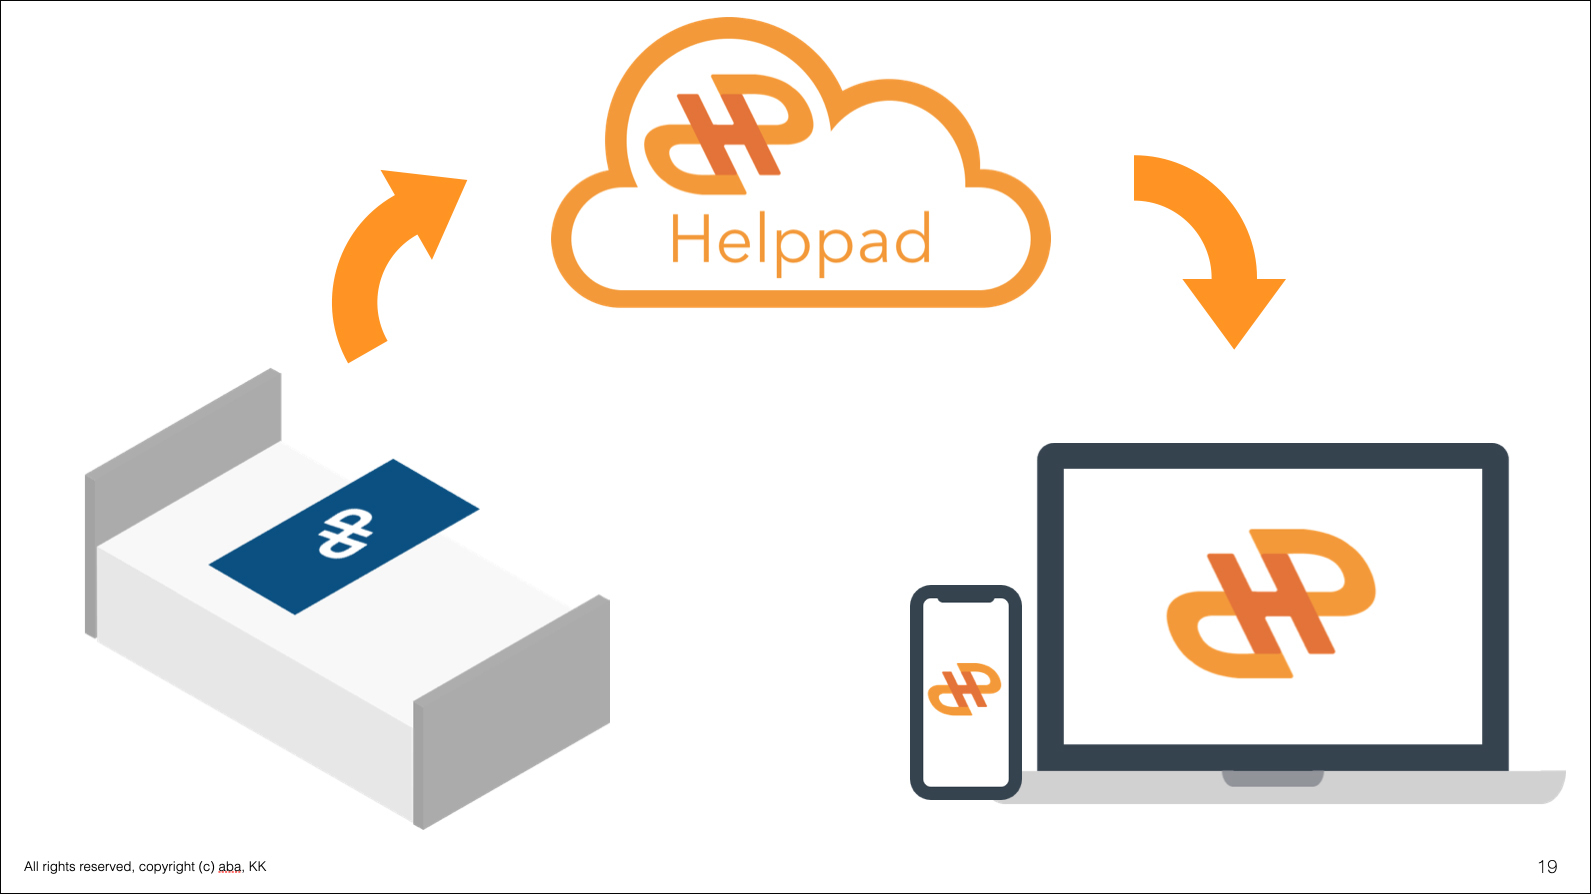 「Helppad」のシステム構成図。当初はクラウドのイラストがなかったが、クラウドに検査データを蓄積し、アプリに届くという流れをイメージしやすいよう、急遽加えた